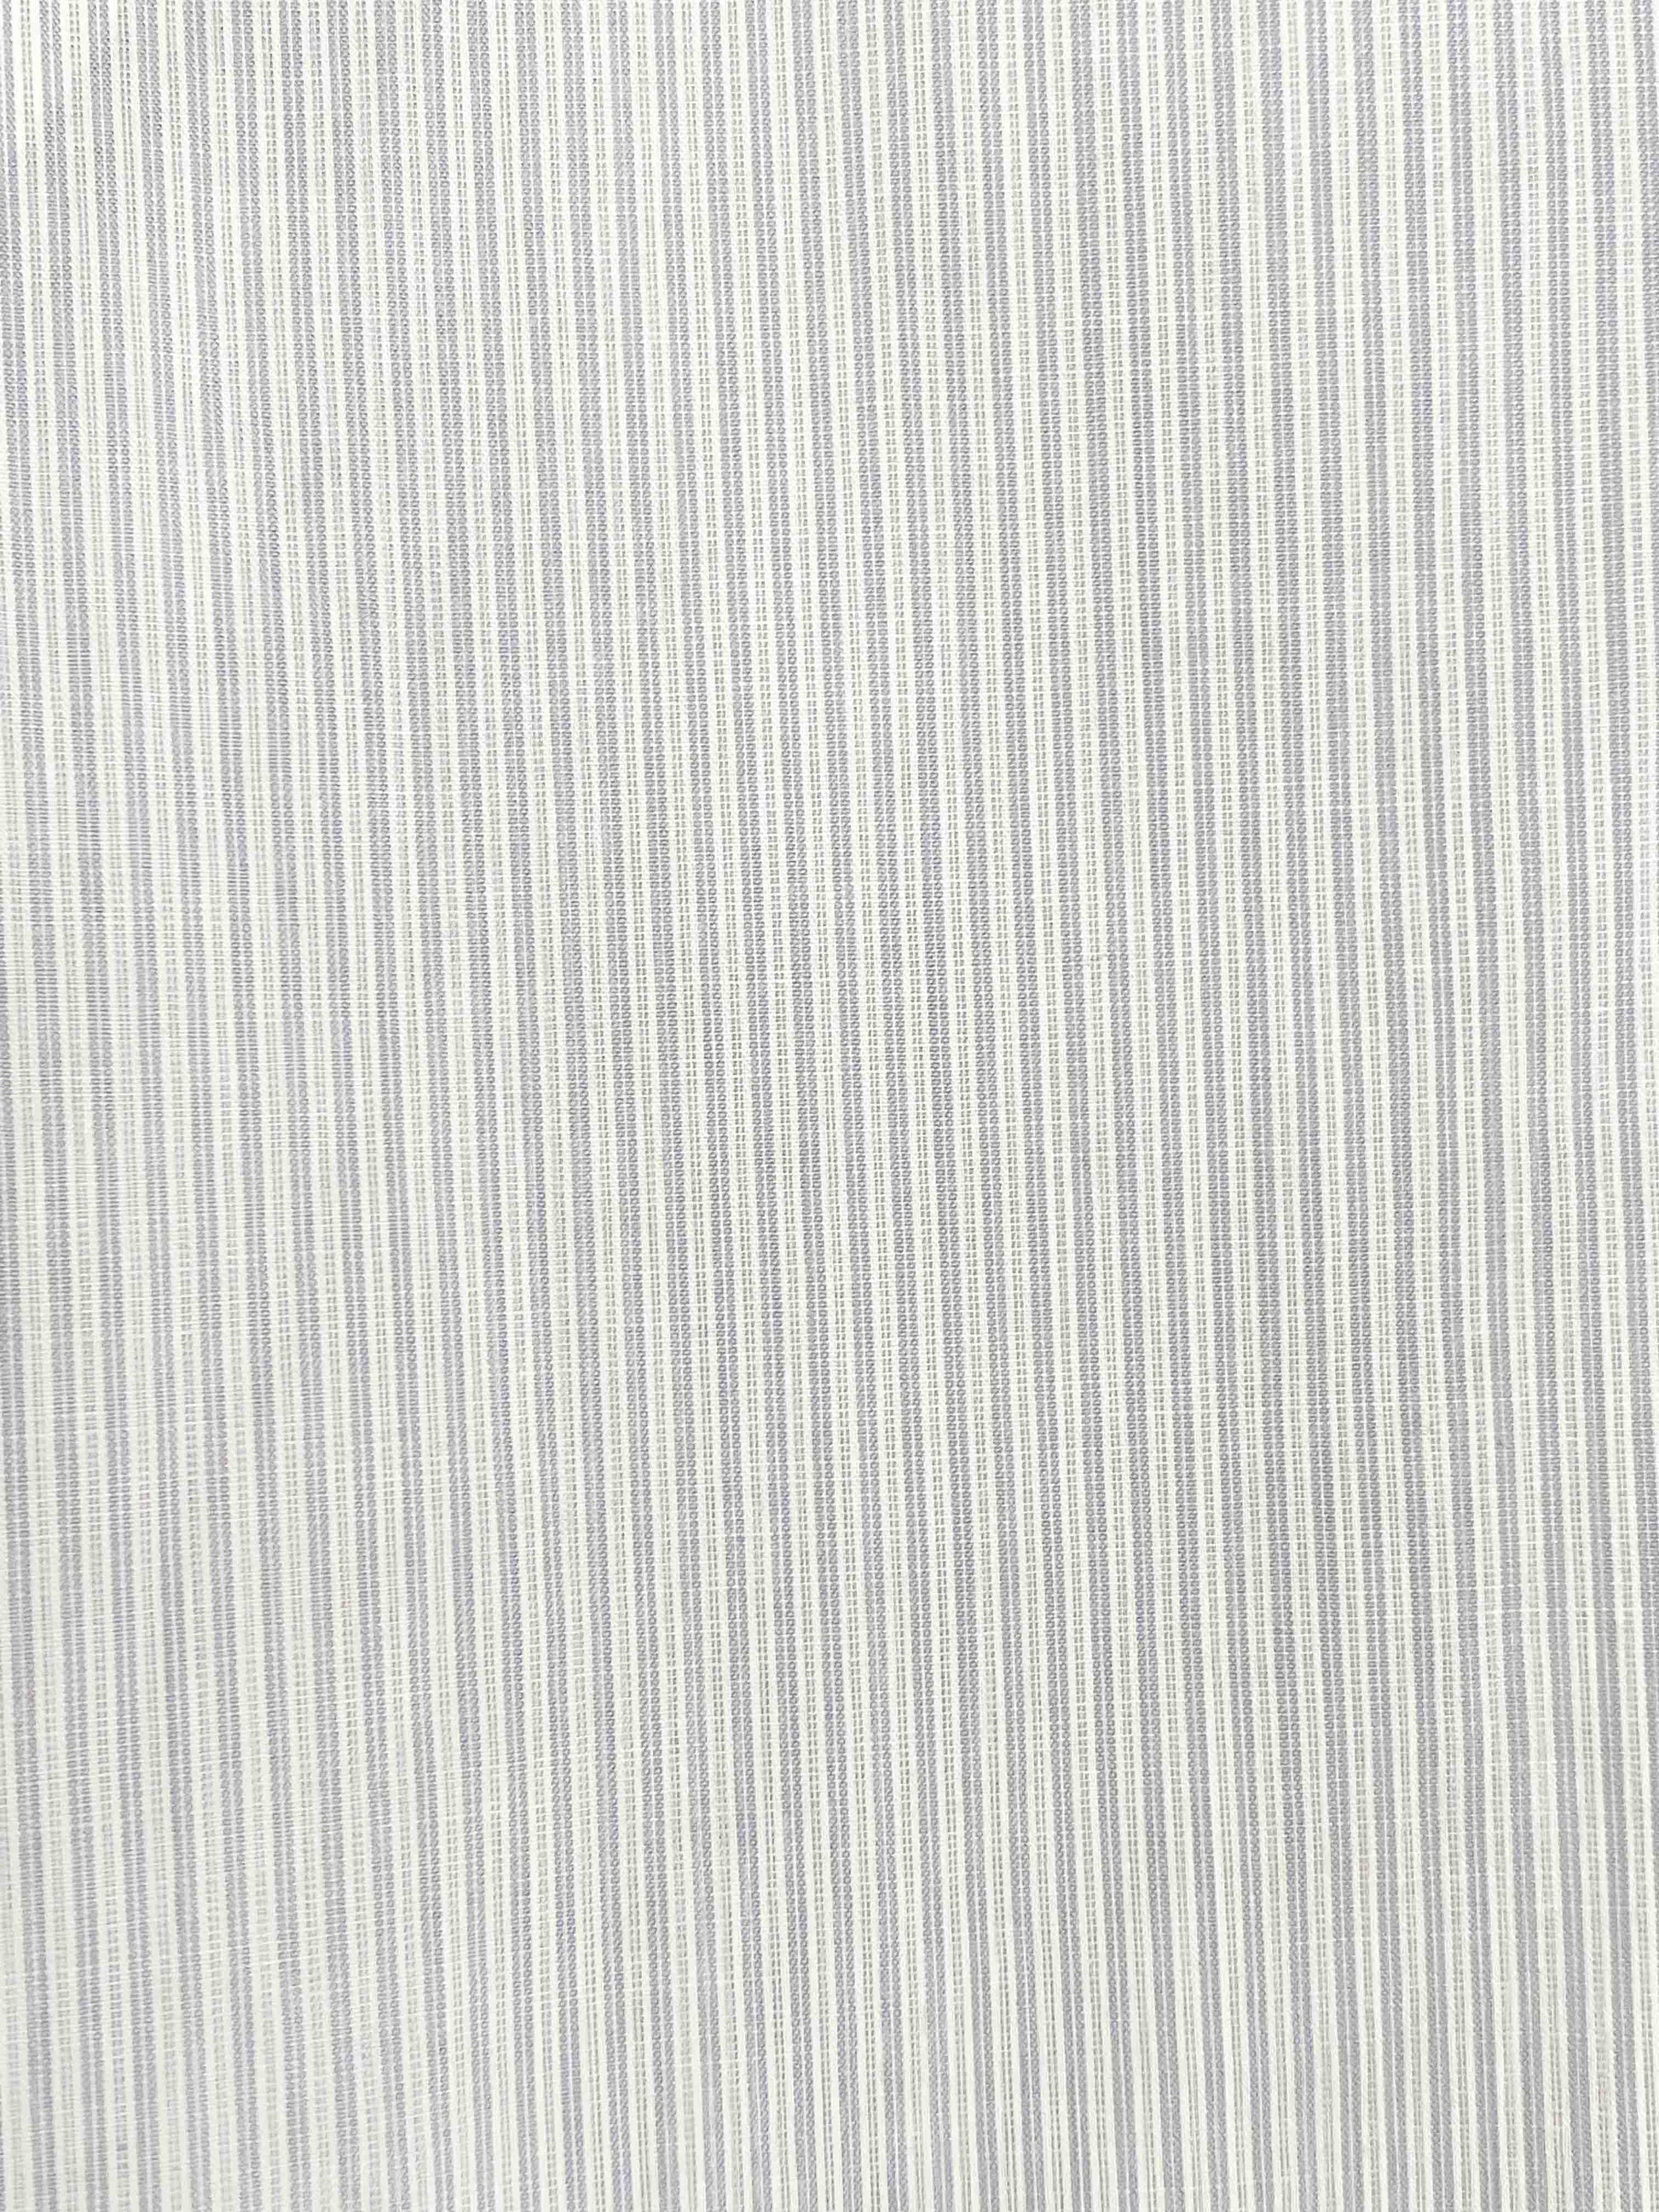 Close up of Capped Sleeve Dress - Dream Stripe fabric by Deiji Studios